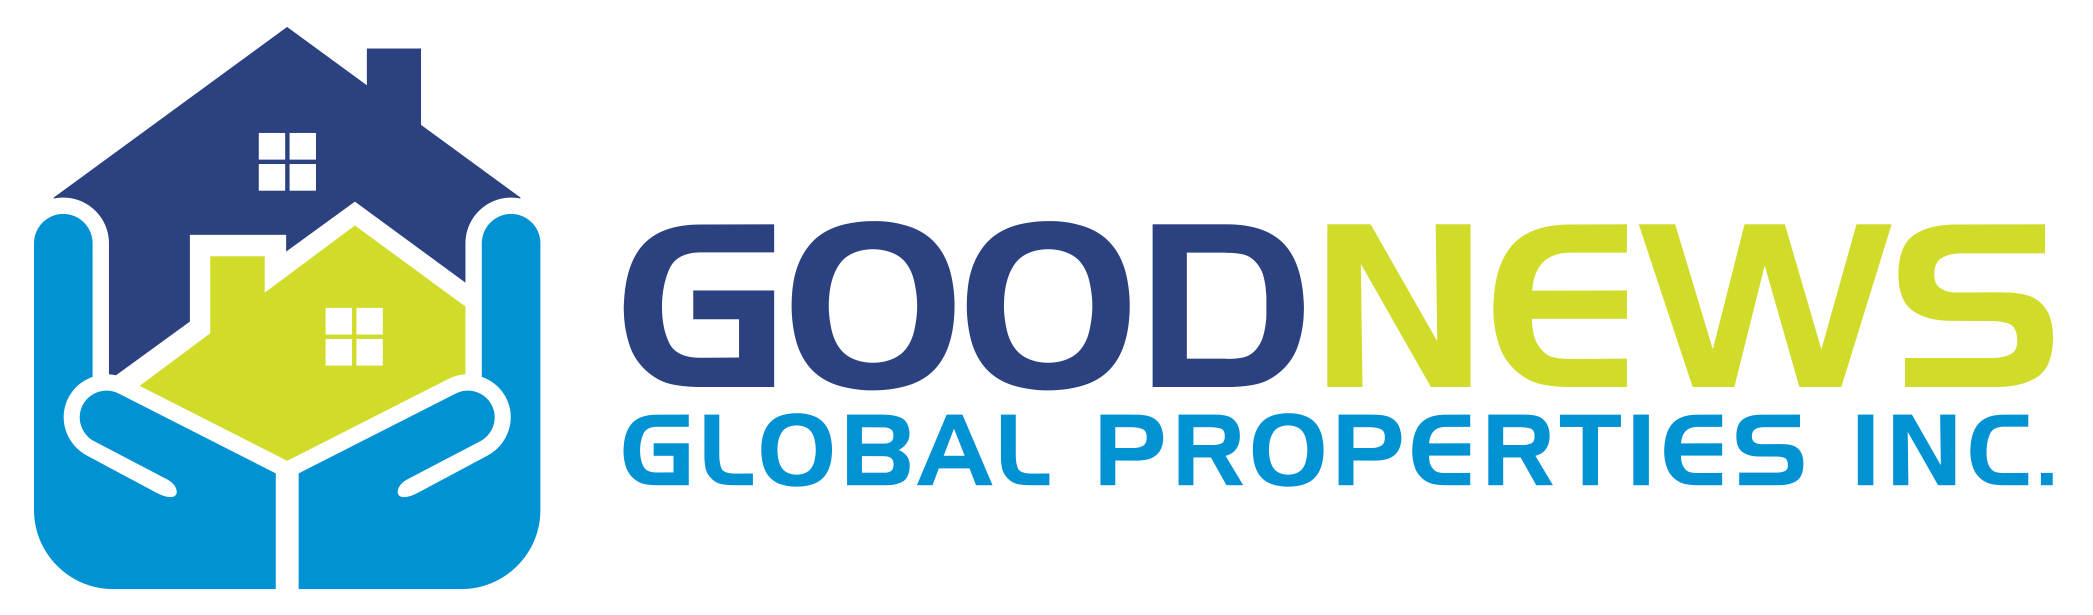 Good News Global Properties Inc logo